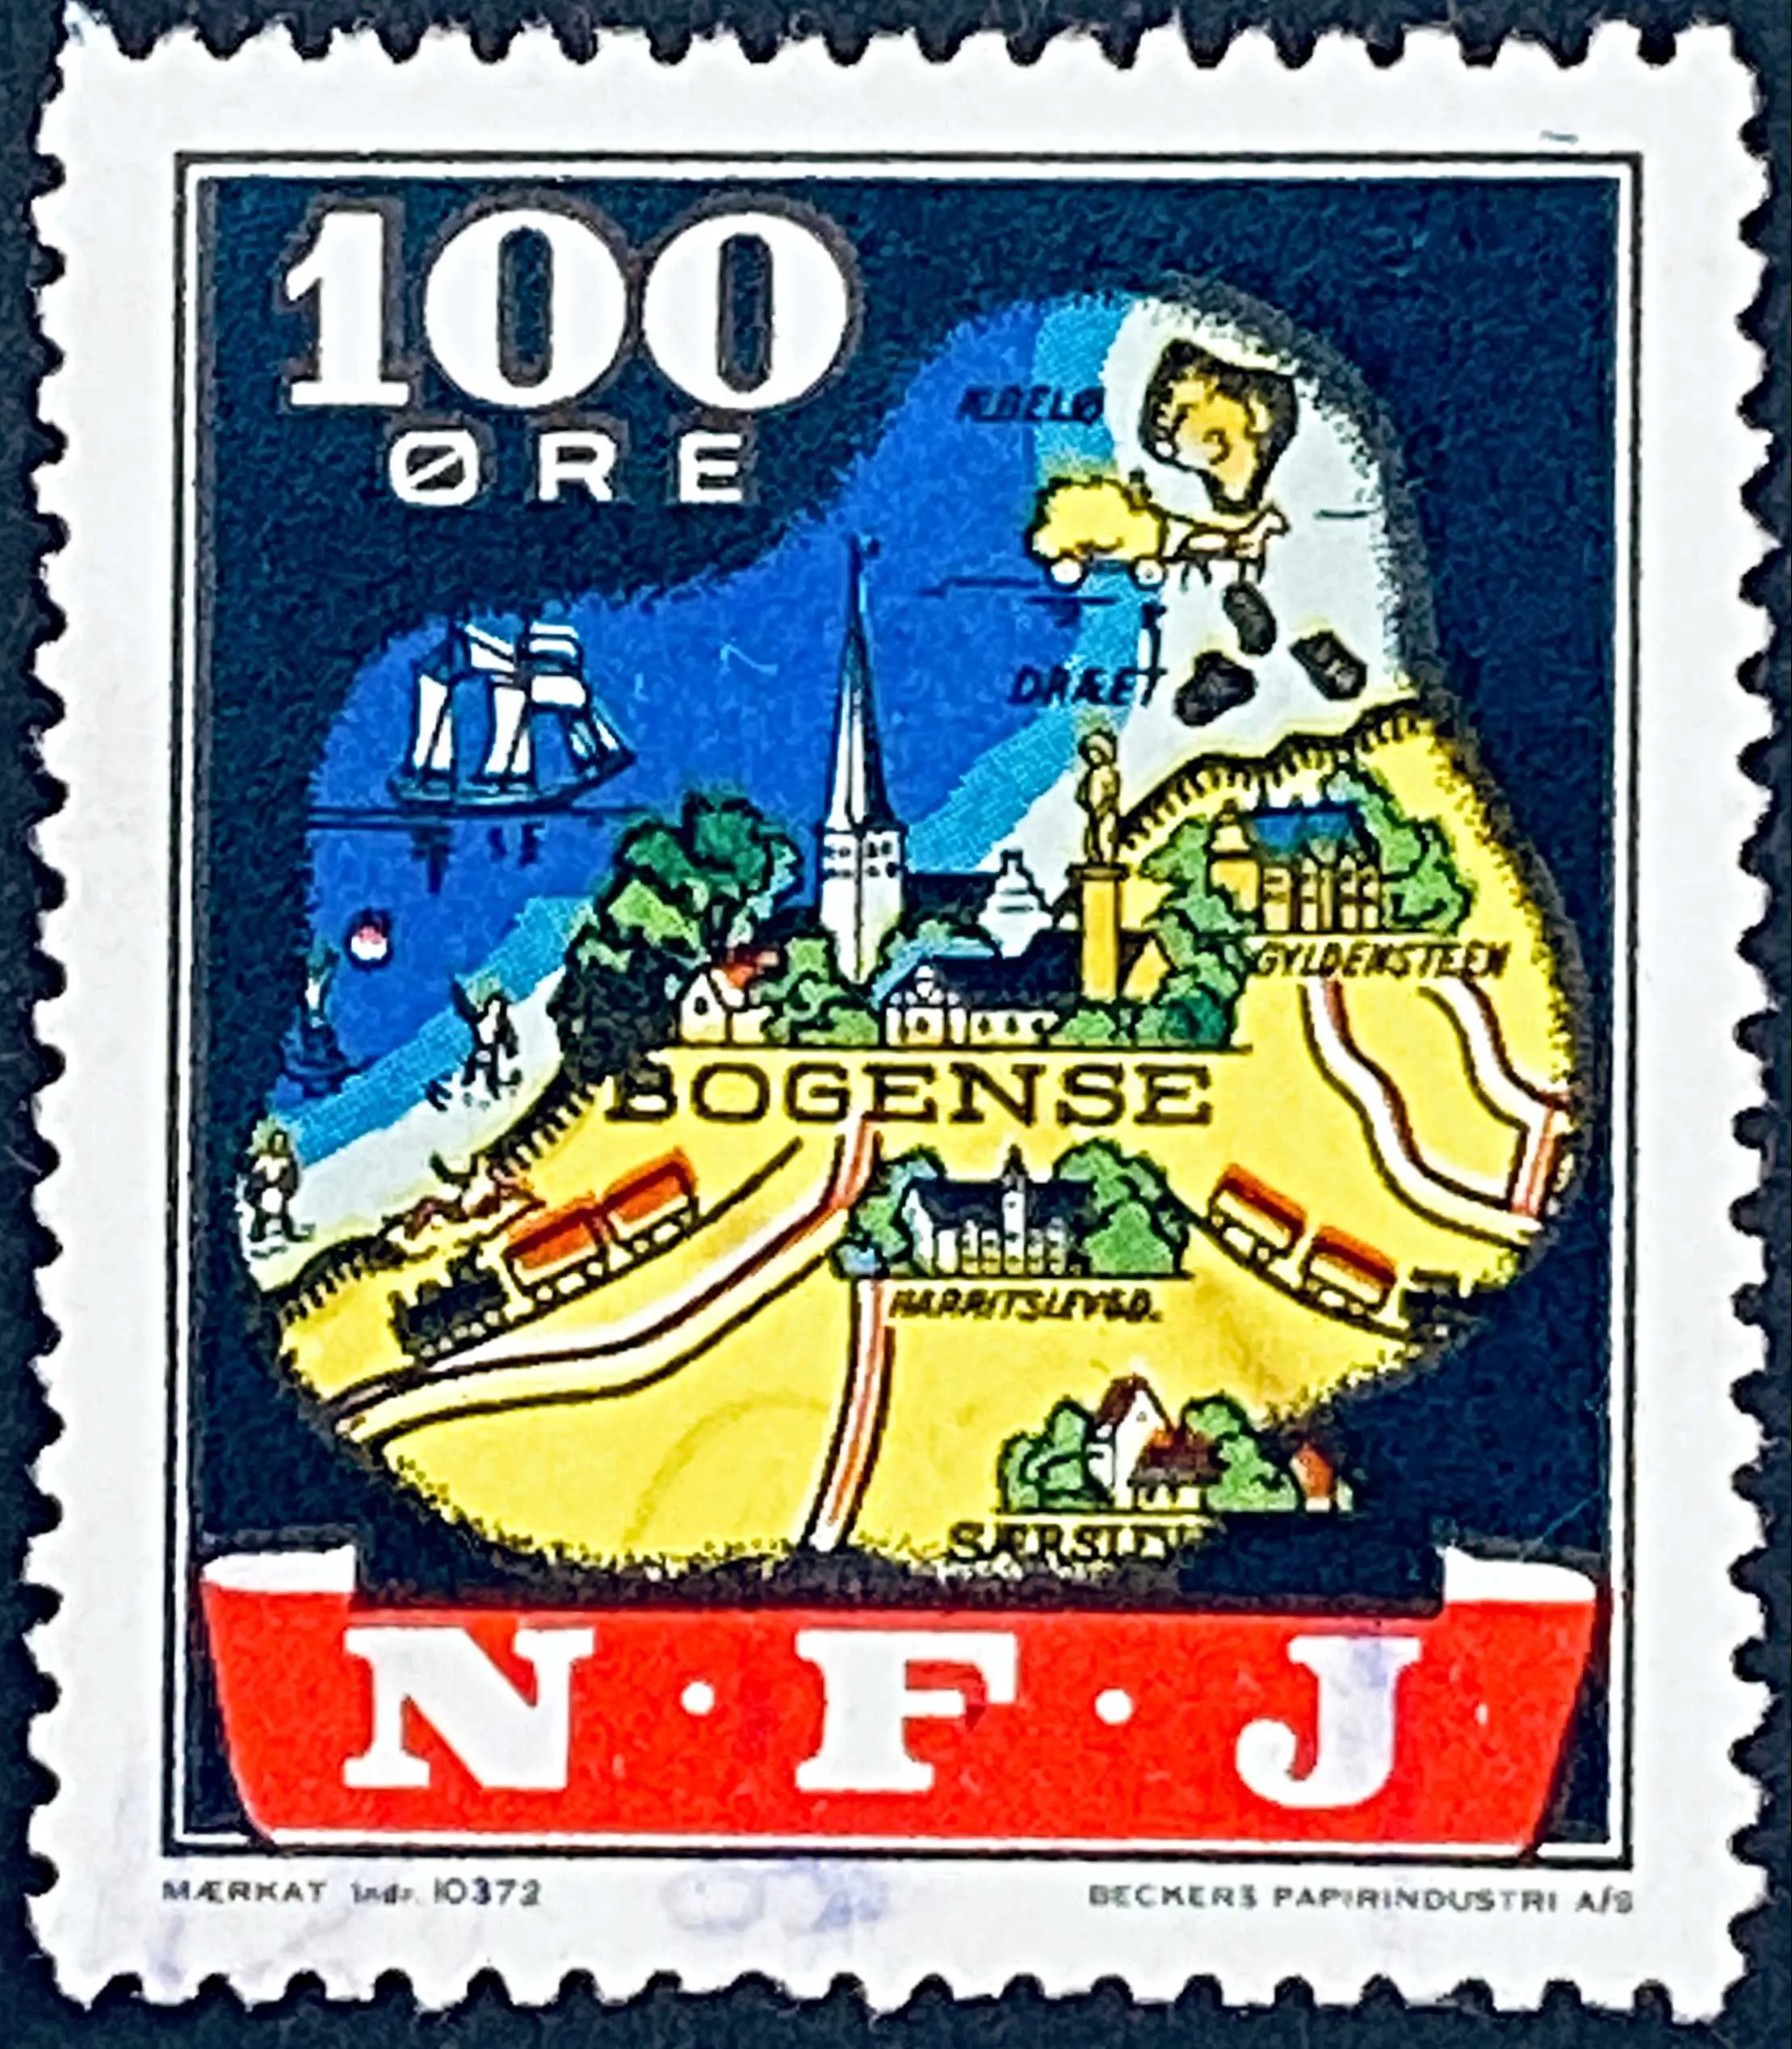 NFJ 42 - 100 Øre Motiv: Kort over Bogense by og omegn - Flerfarvet - trykkeri: Beckers Papirindustri A/S.